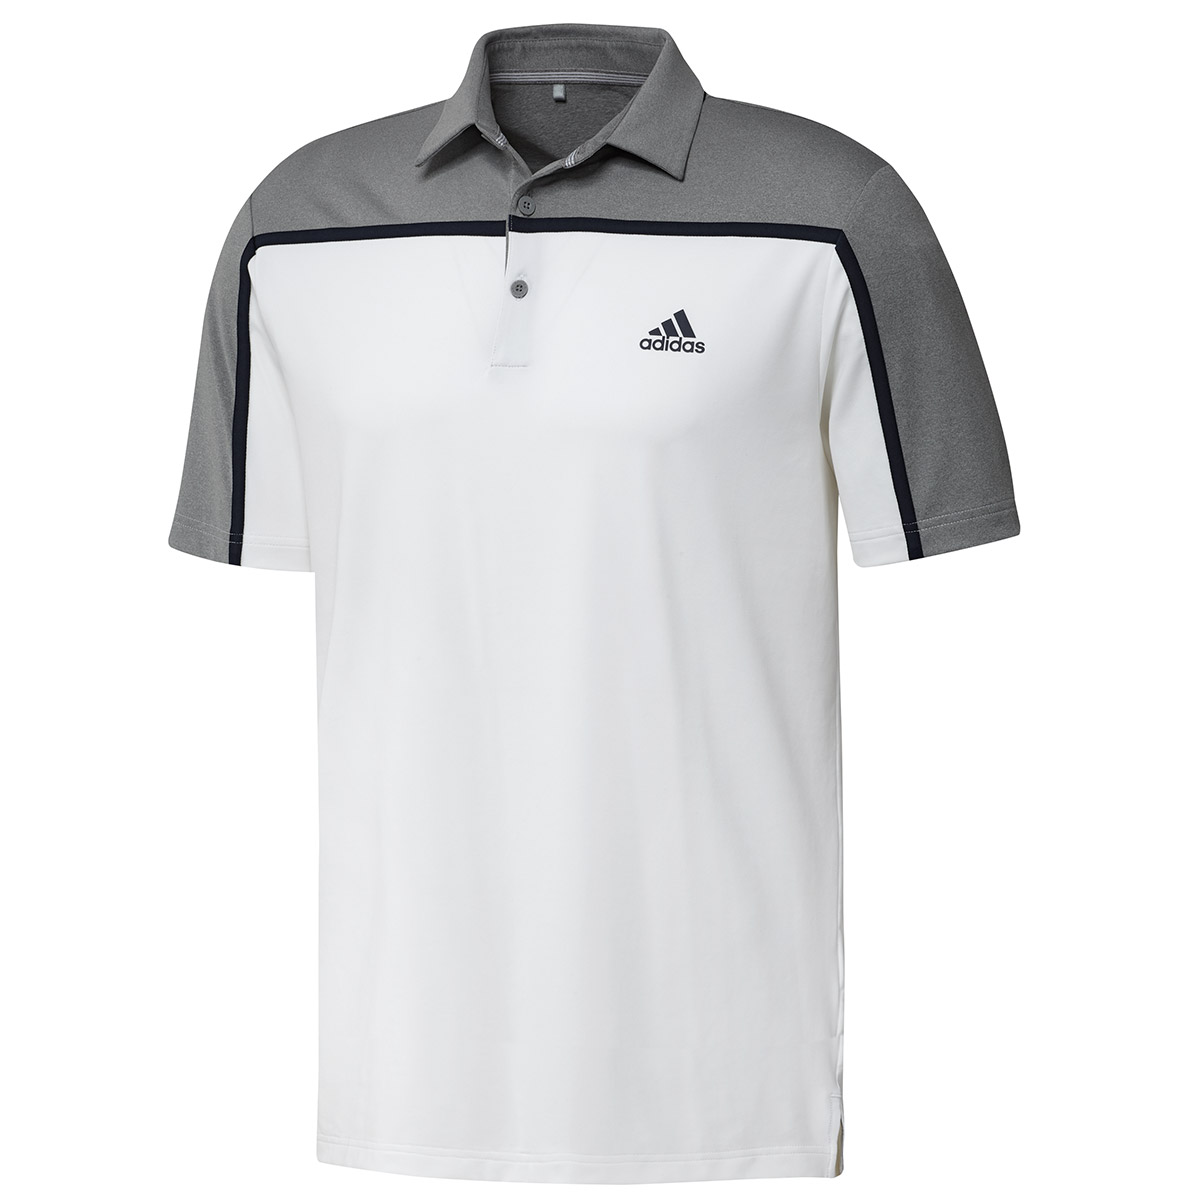  adidas  Golf Ultimate 3 Stripe Polo  Shirt Online Golf